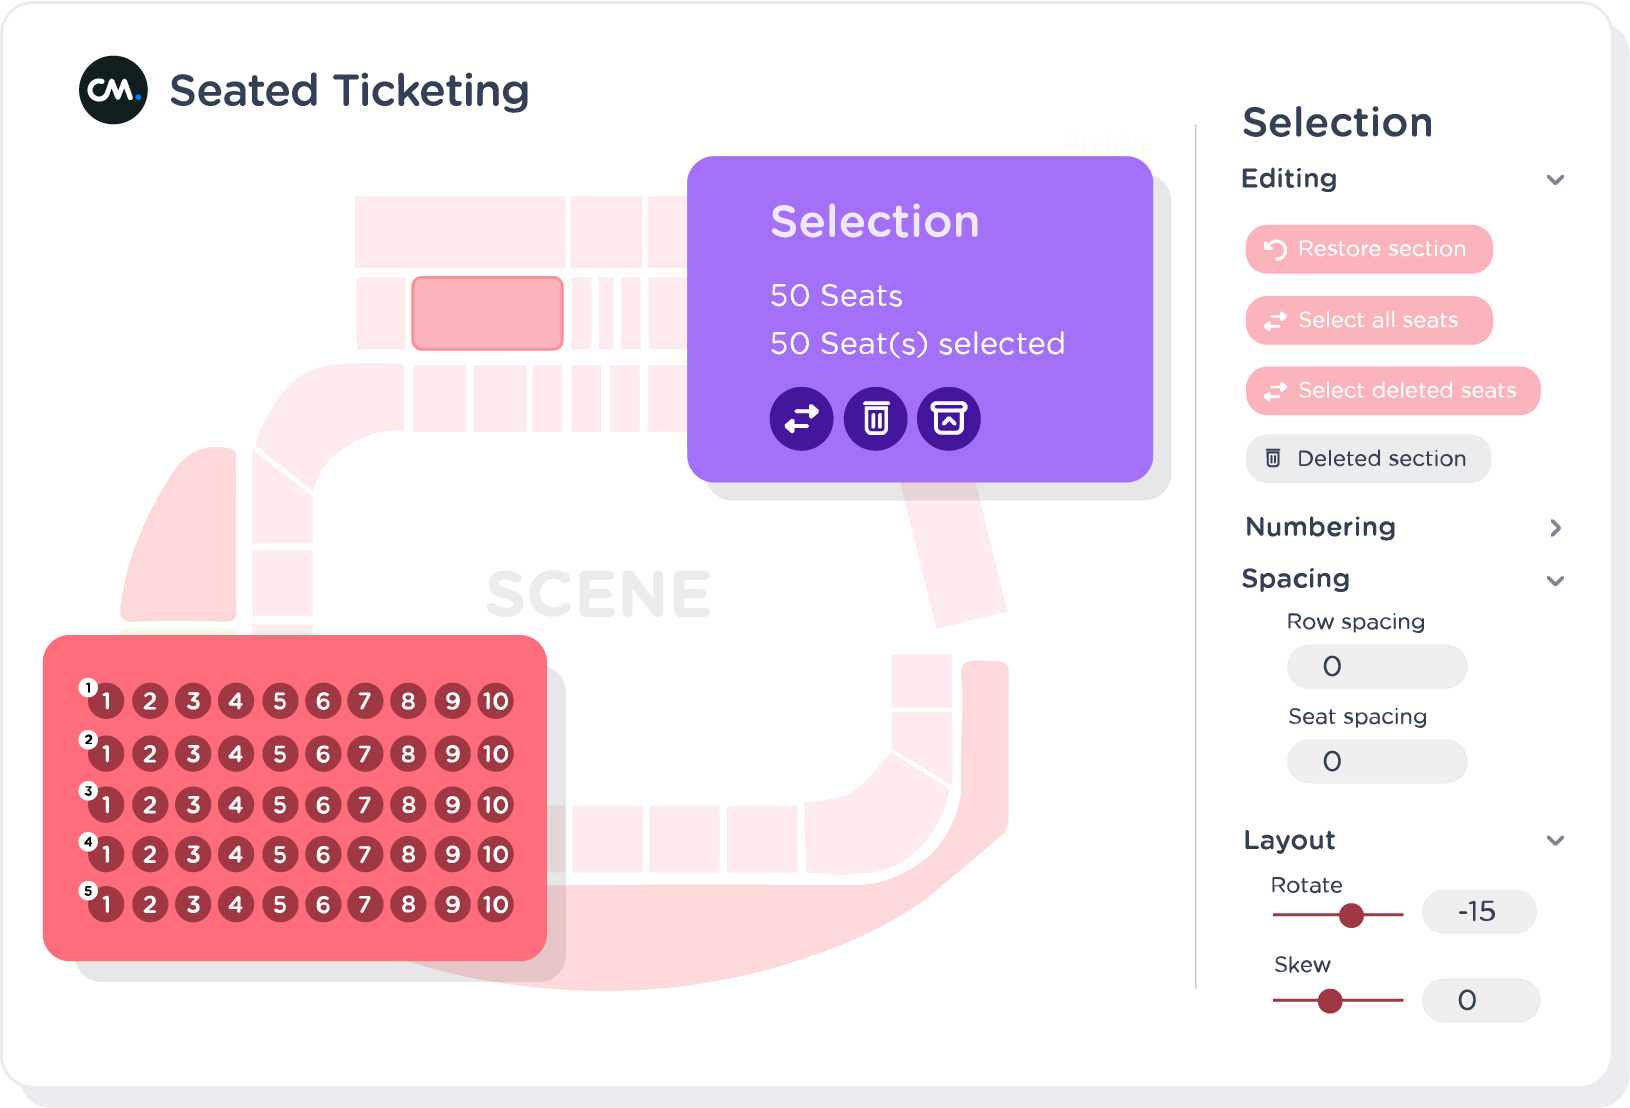 CM.com Ticketing - Seated Ticketing